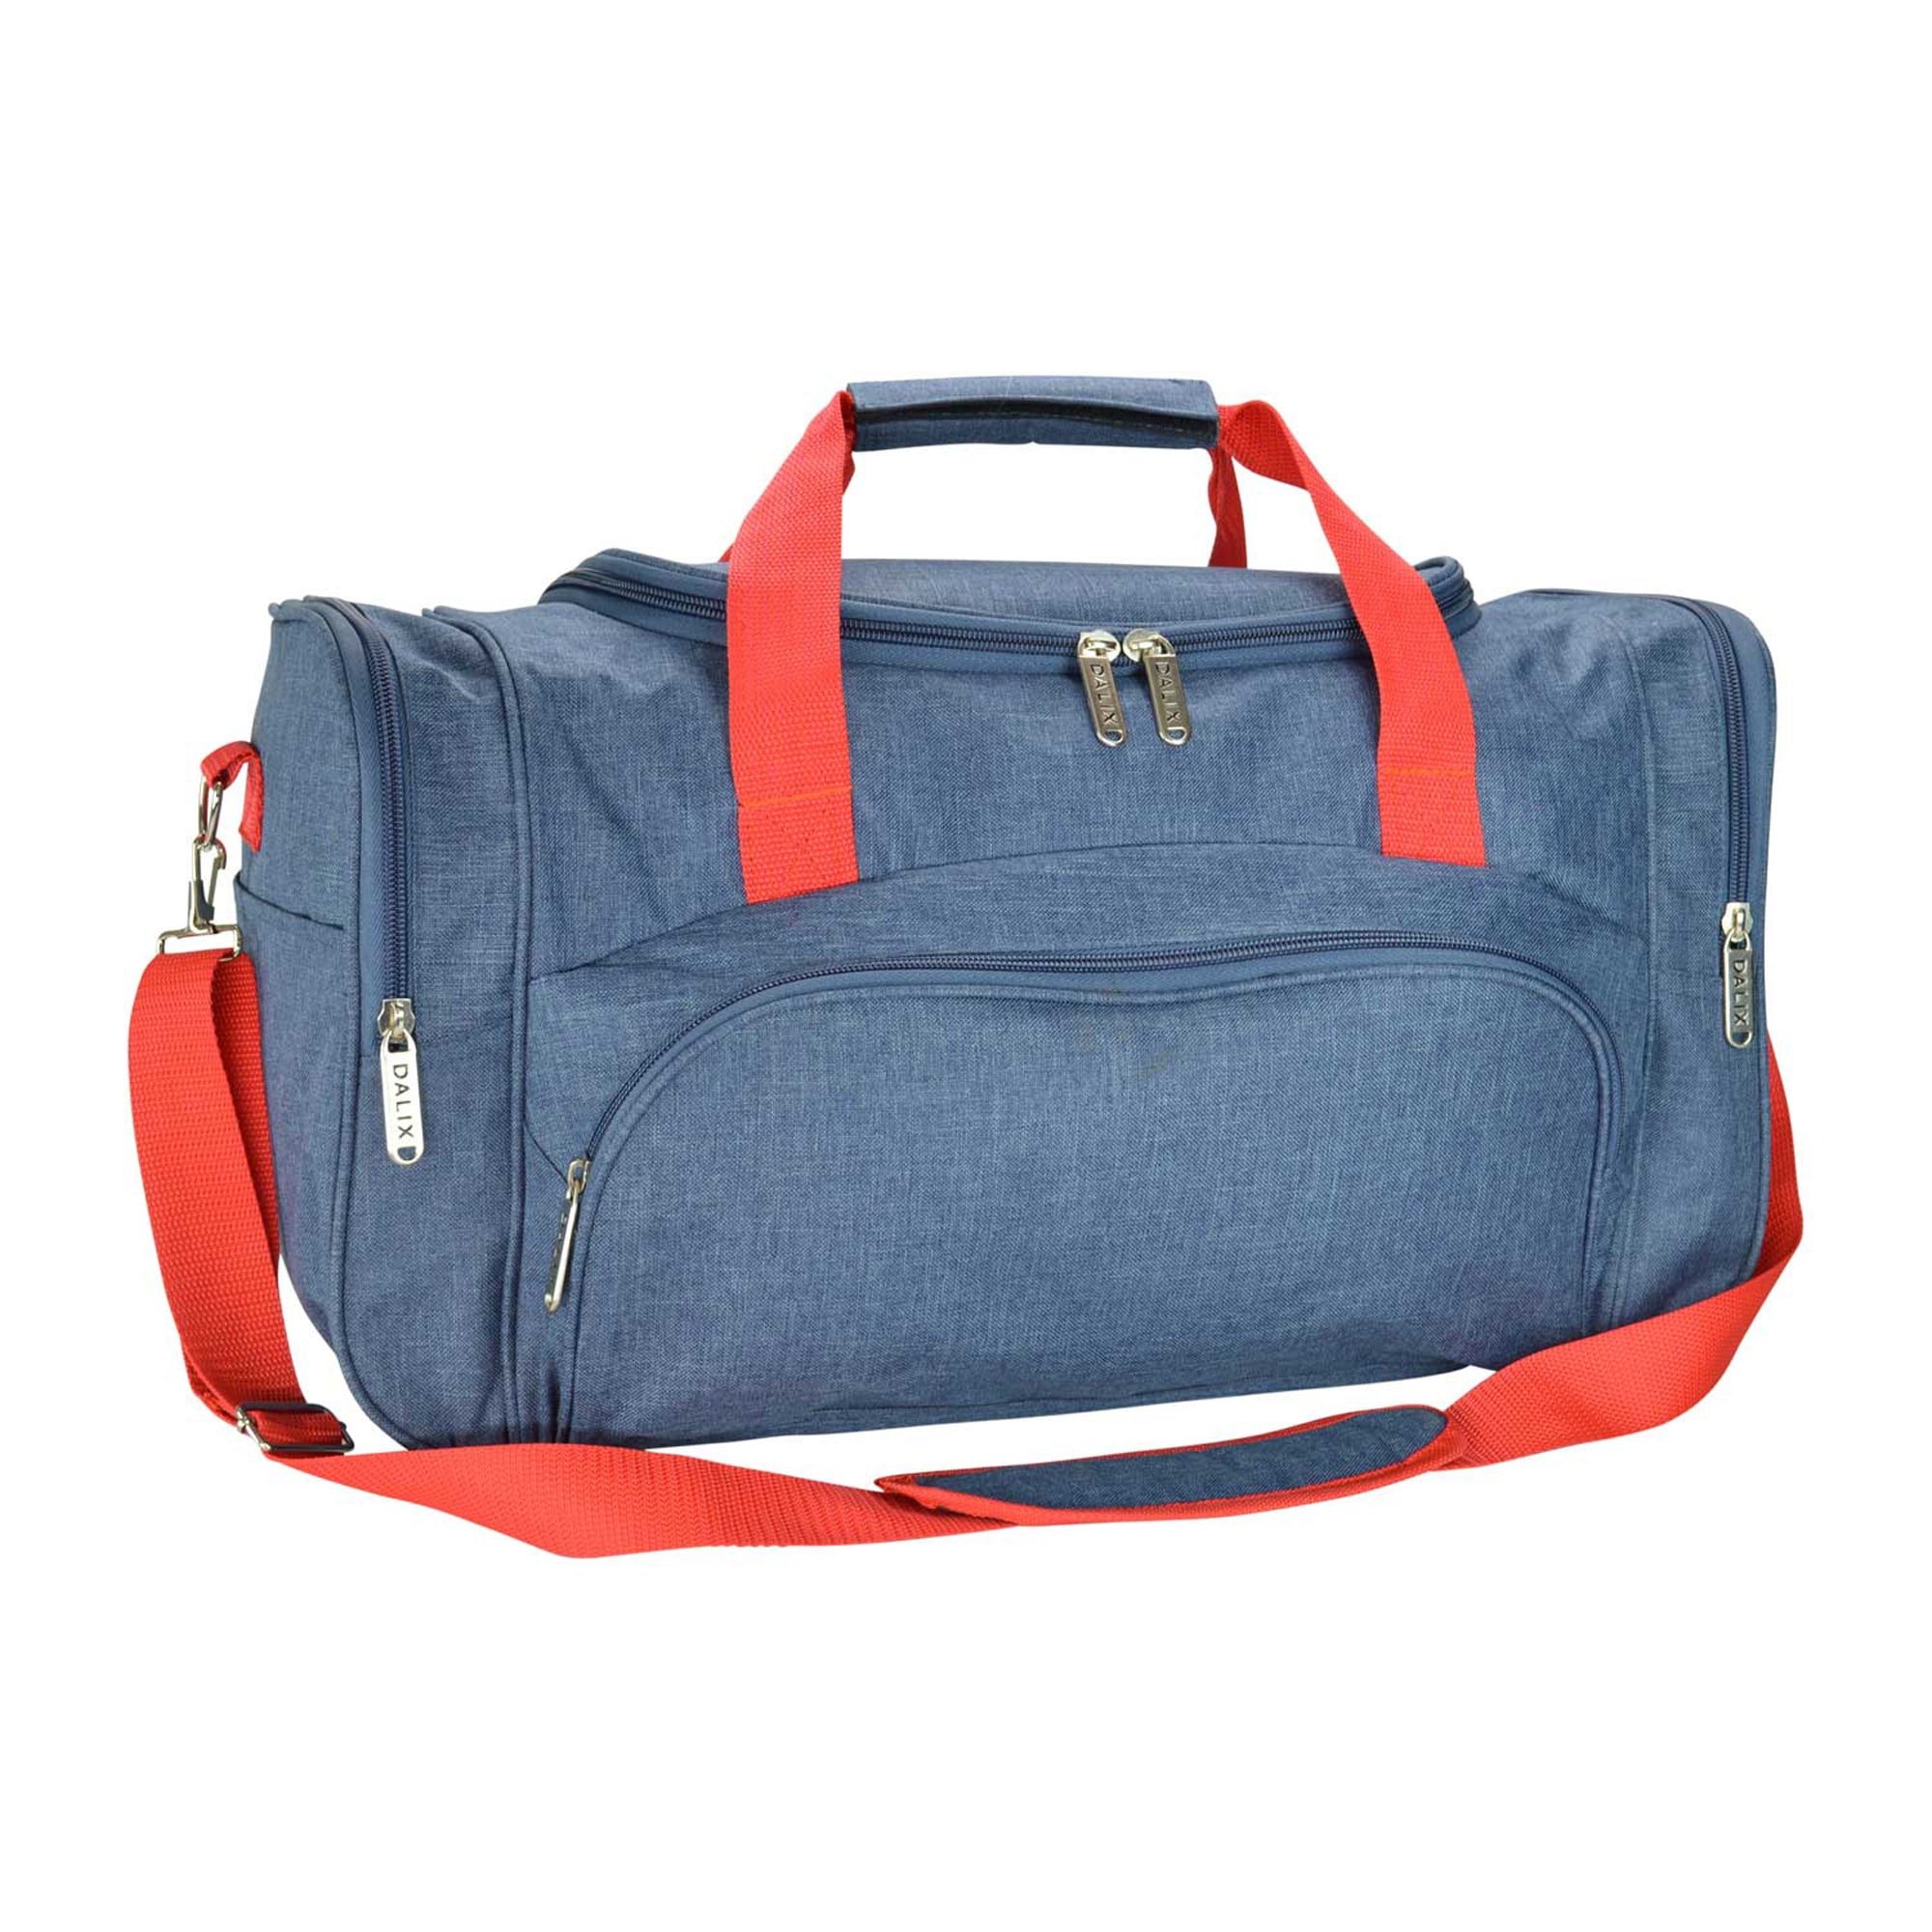 24 Hour Fitness Gym Duffle Bag Travel Carry On Sports Shoulder Bag Black Blue 